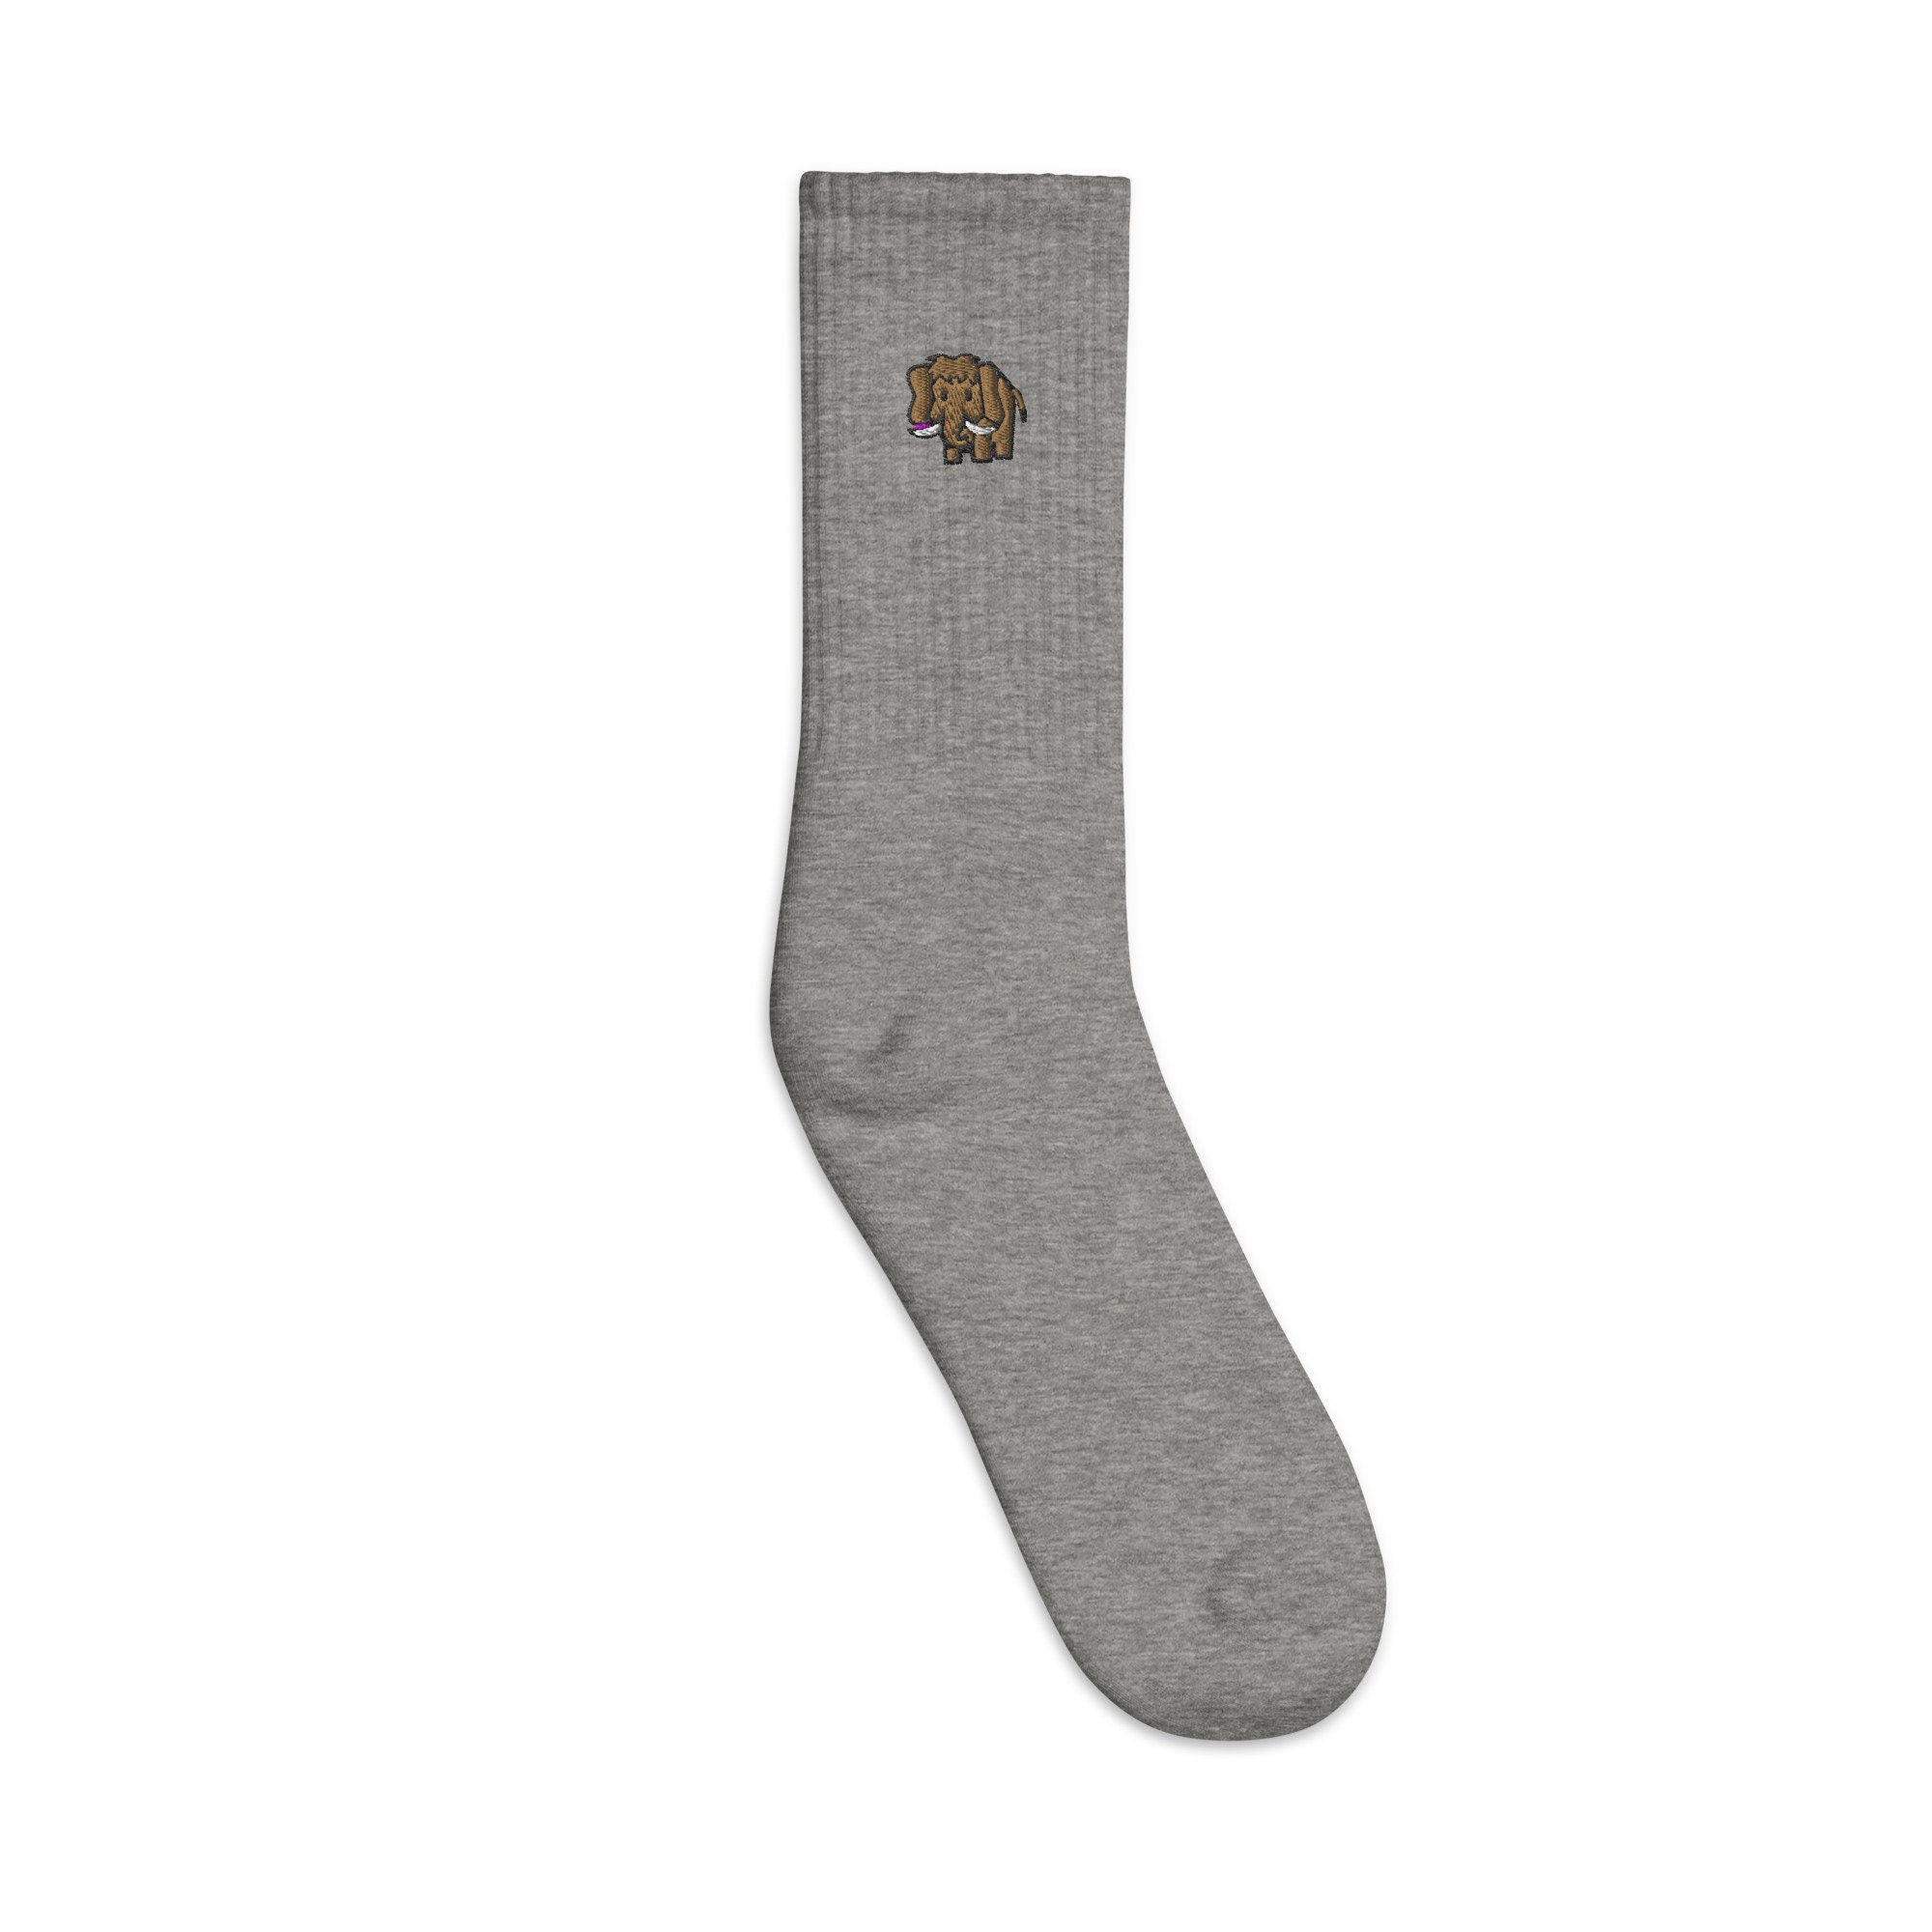 Mammoth Embroidered Socks, Premium Embroidered Socks, Long Socks Gift - Multiple Colors